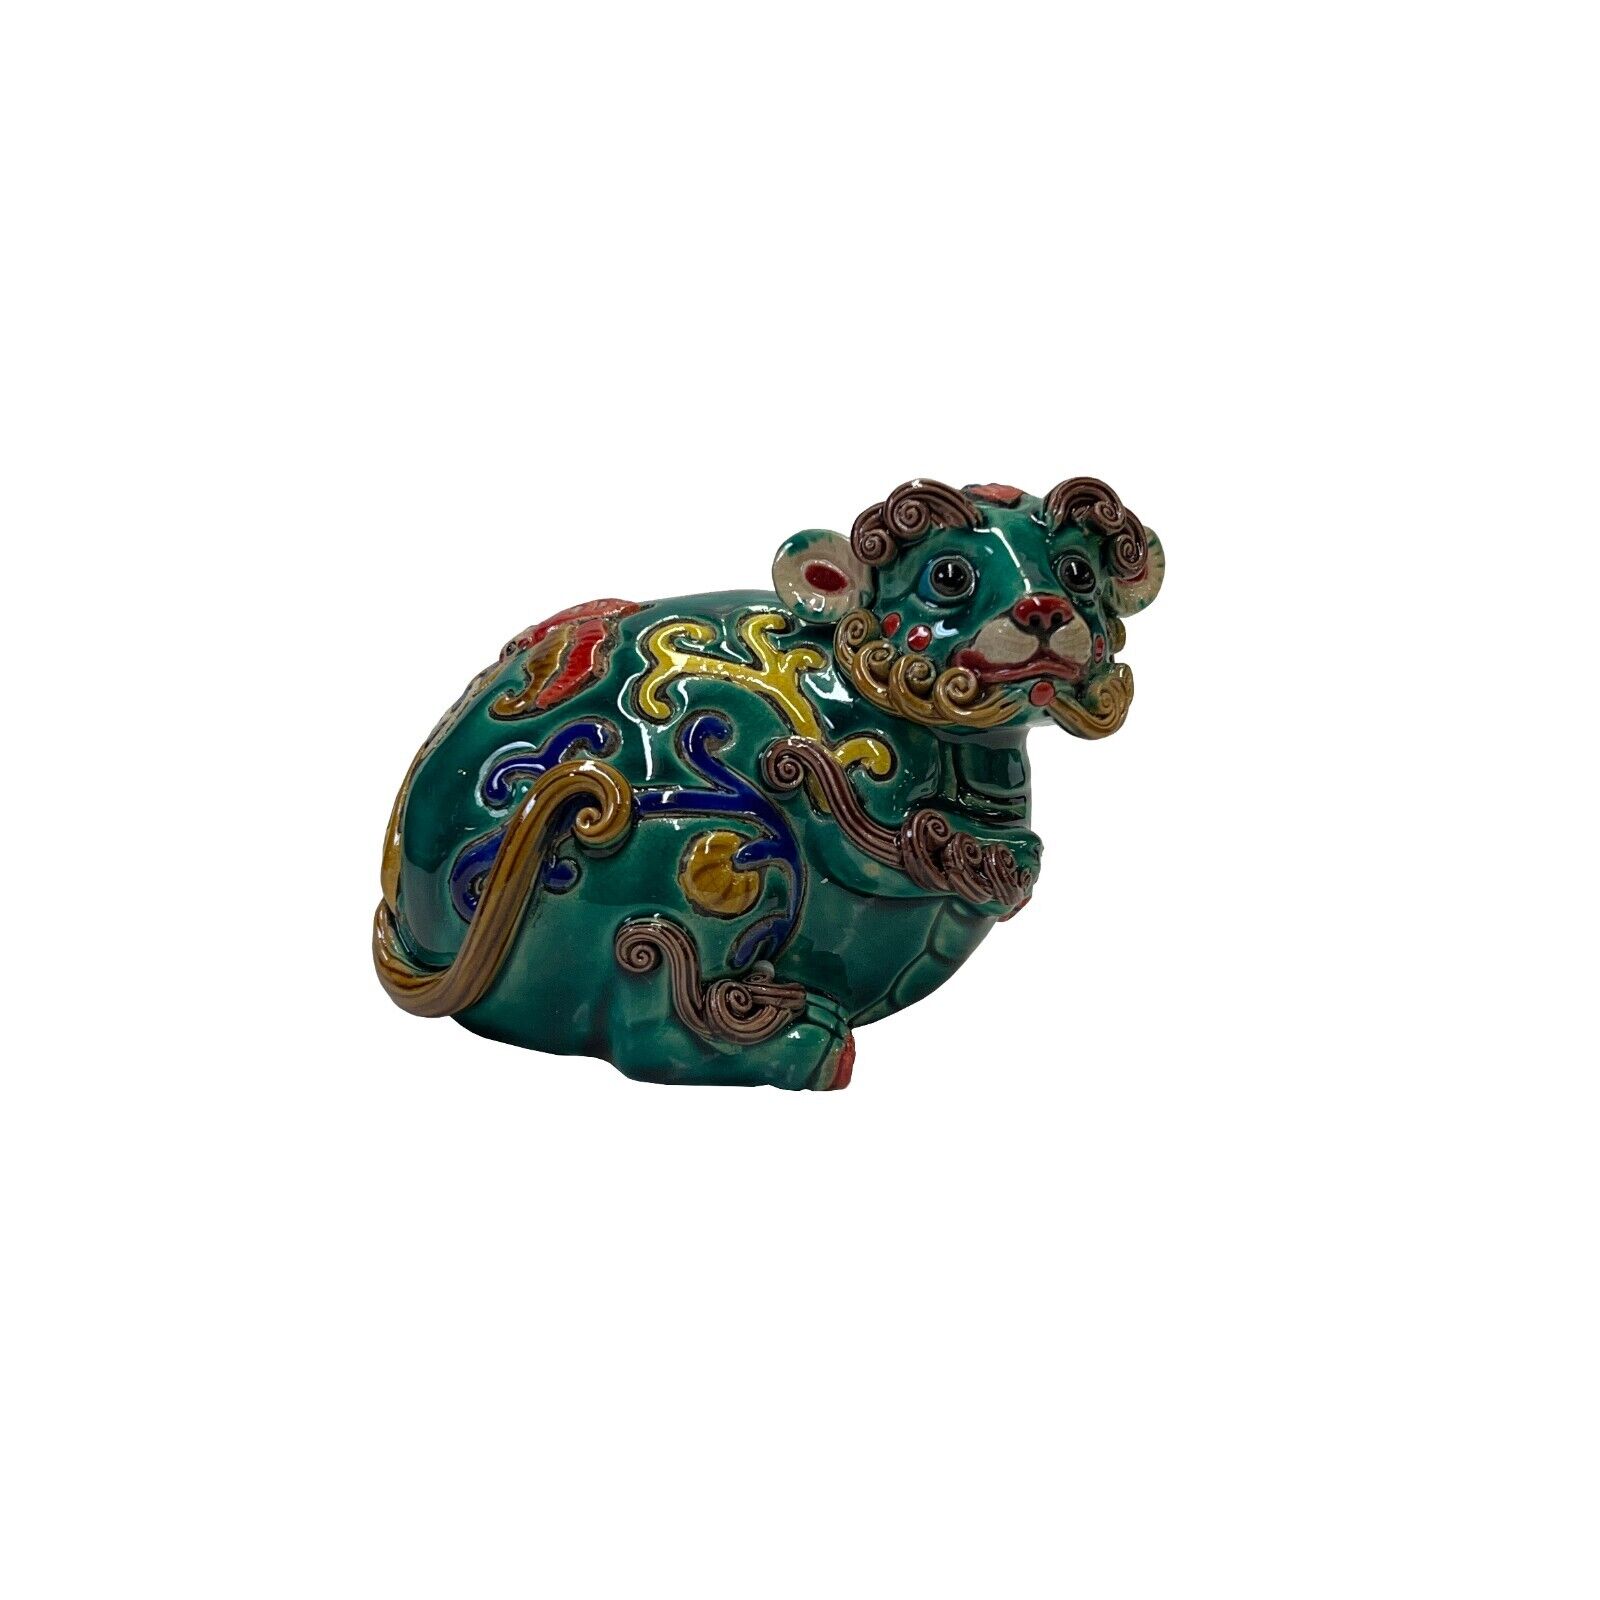 Handmade Green Small Ceramic Artistic Mouse Figure Display Art ws3238